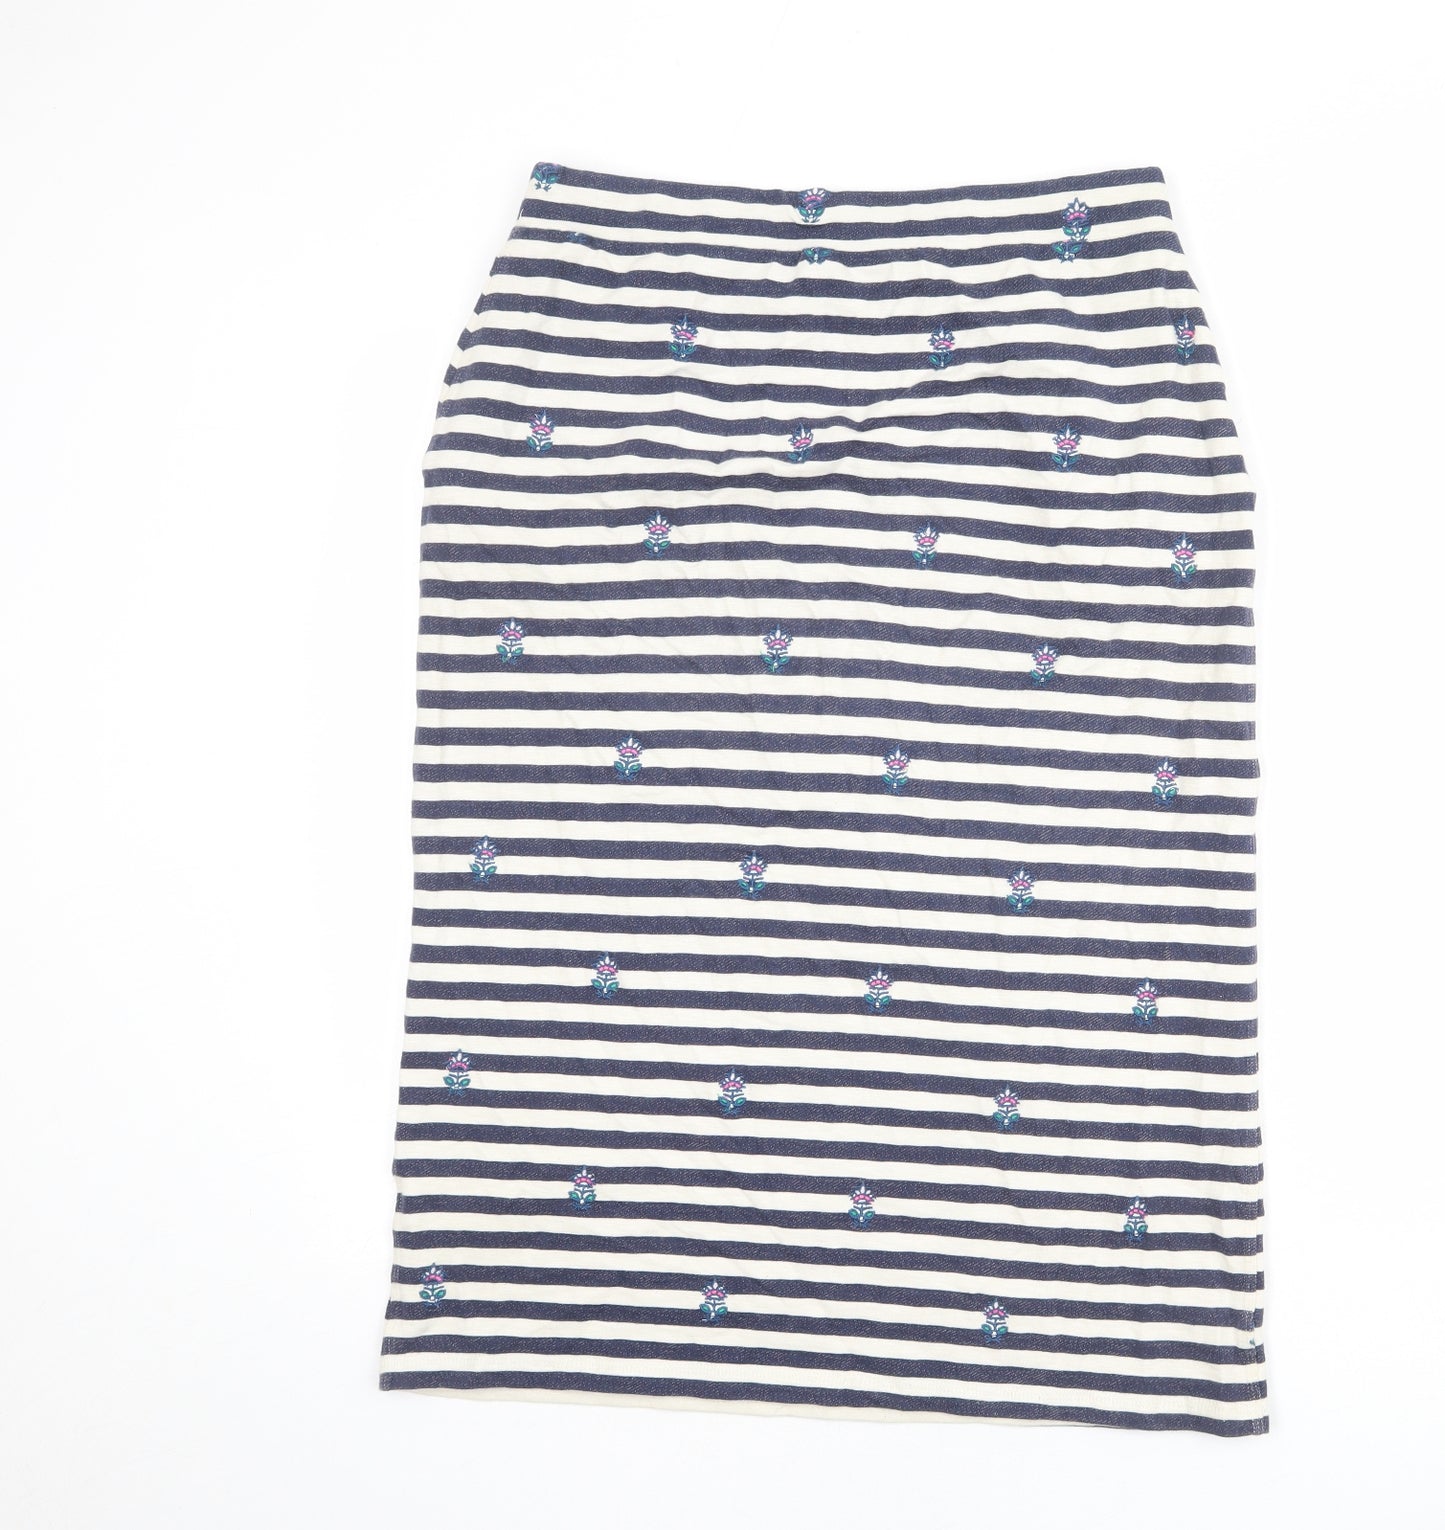 White Stuff Womens Blue Striped Cotton Straight & Pencil Skirt Size 12 - Flower pattern